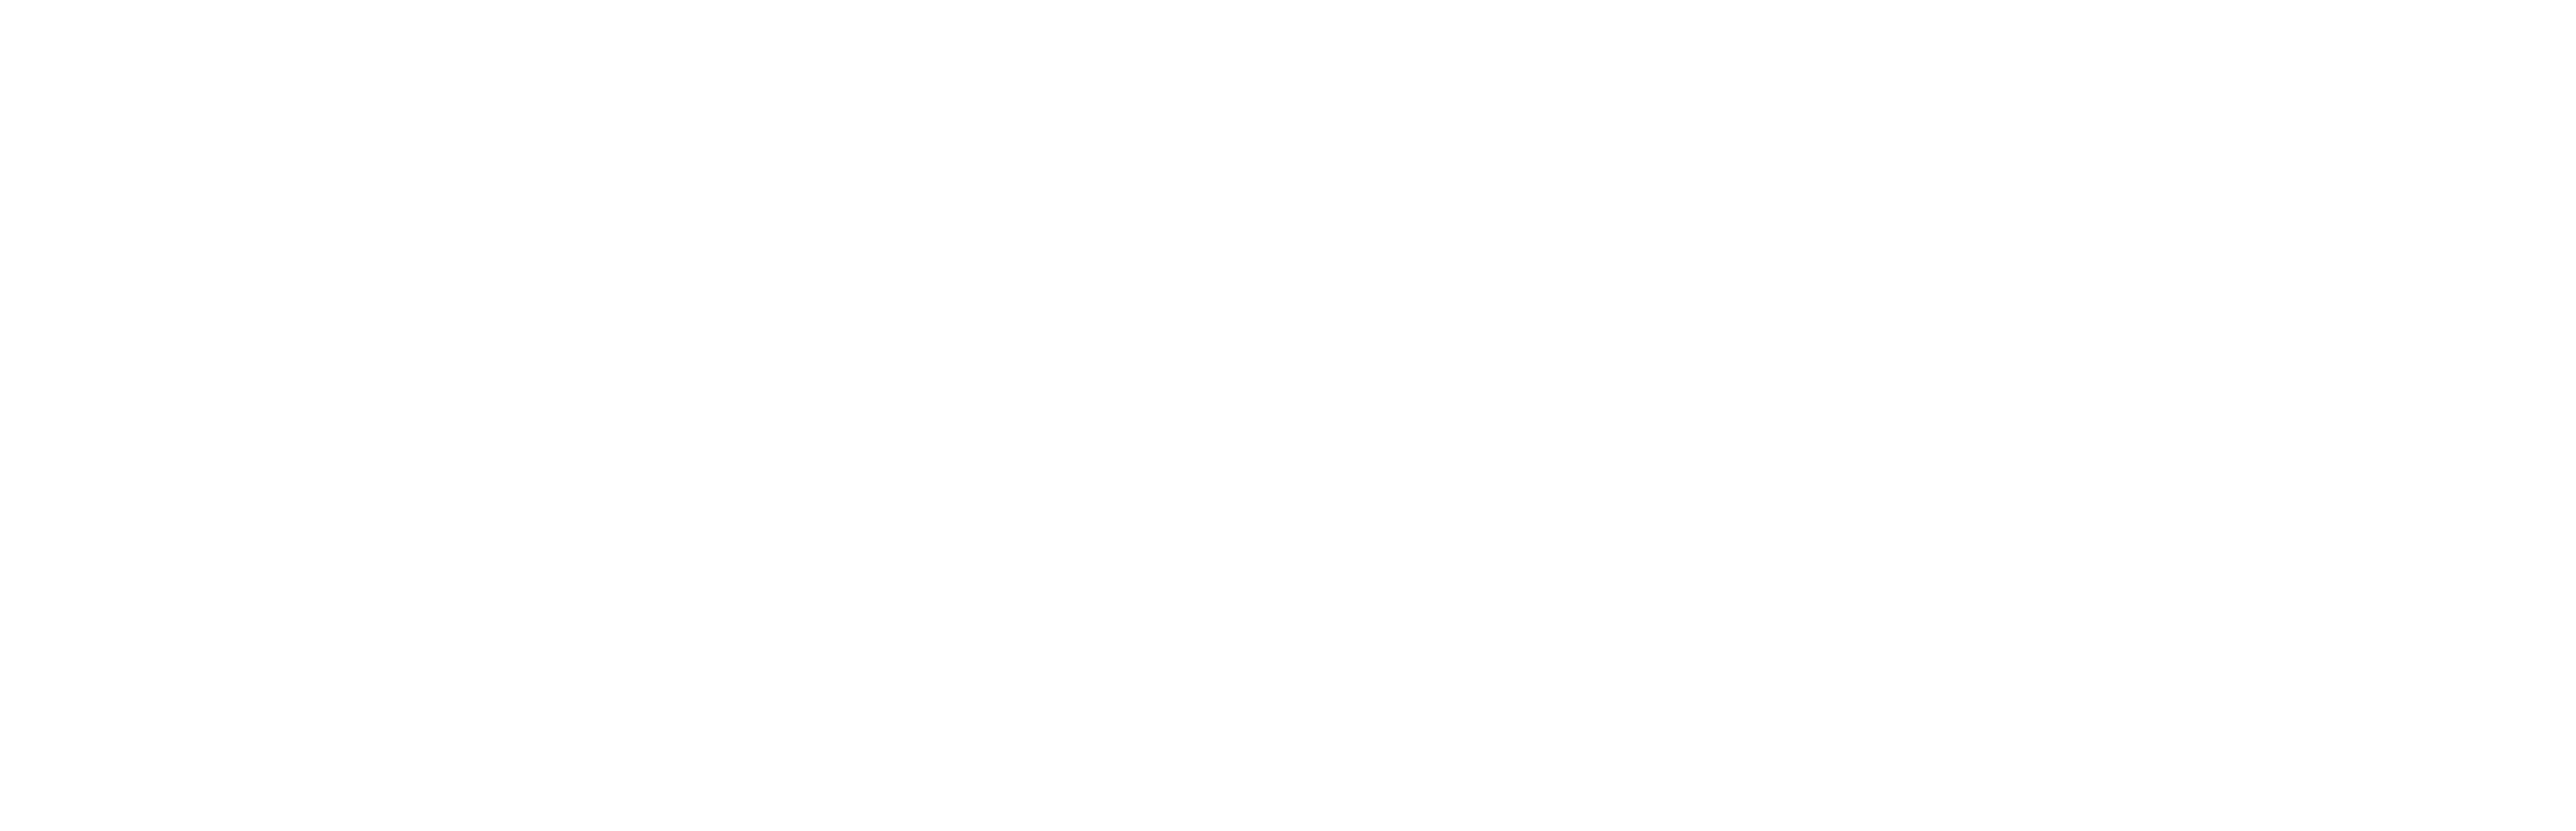 ubisoft logo png